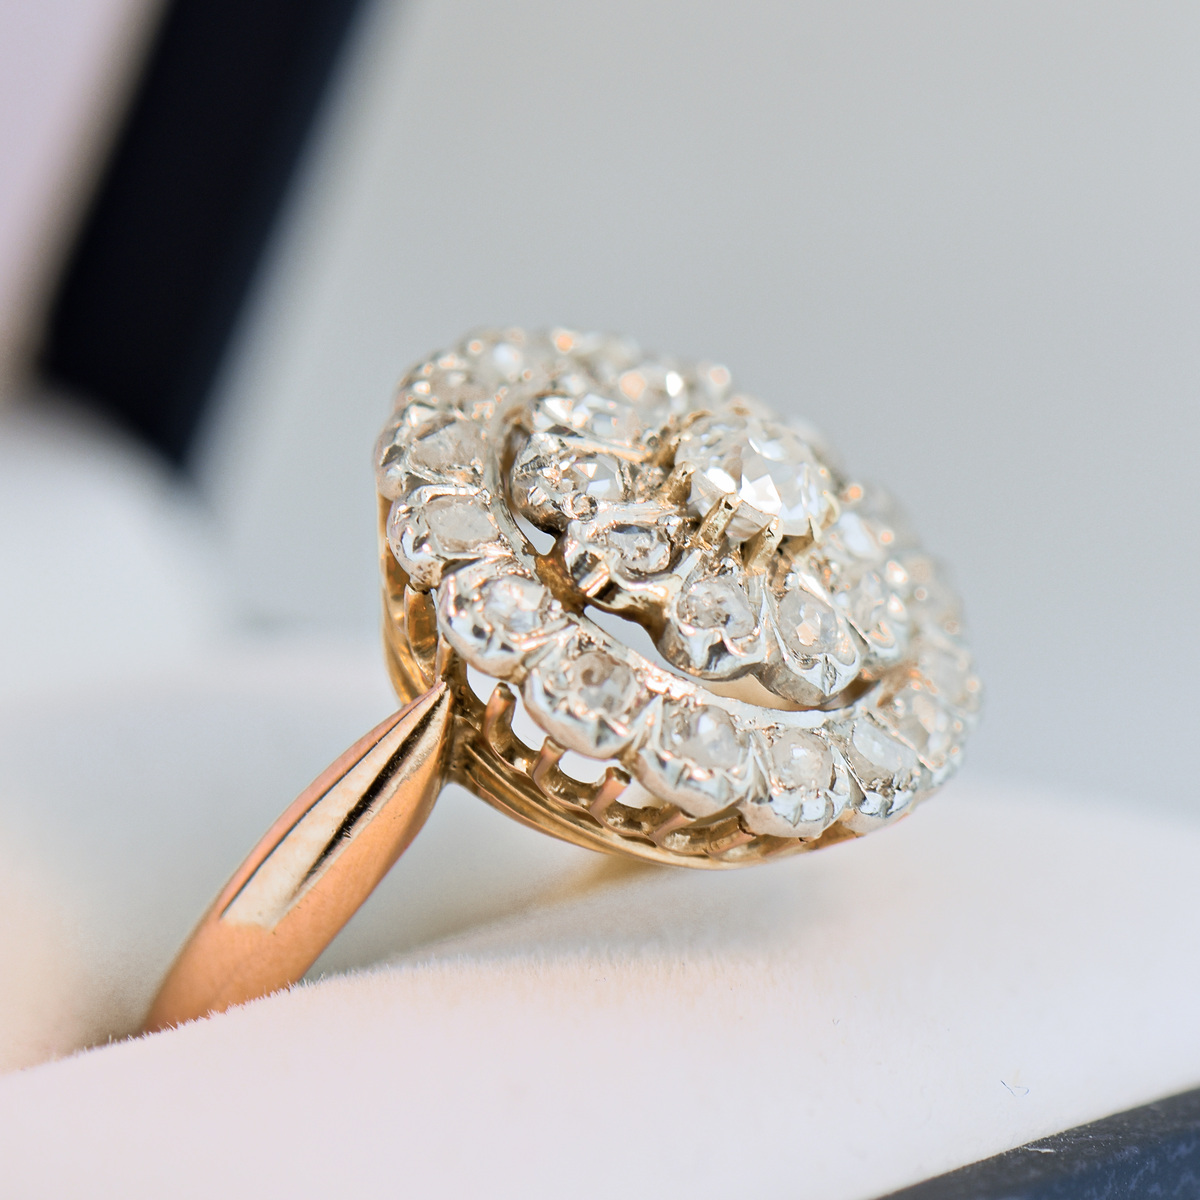 Antique & Vintage Jewelry | Vintage wedding jewelry, Vintage engagement  rings, Unique engagement rings